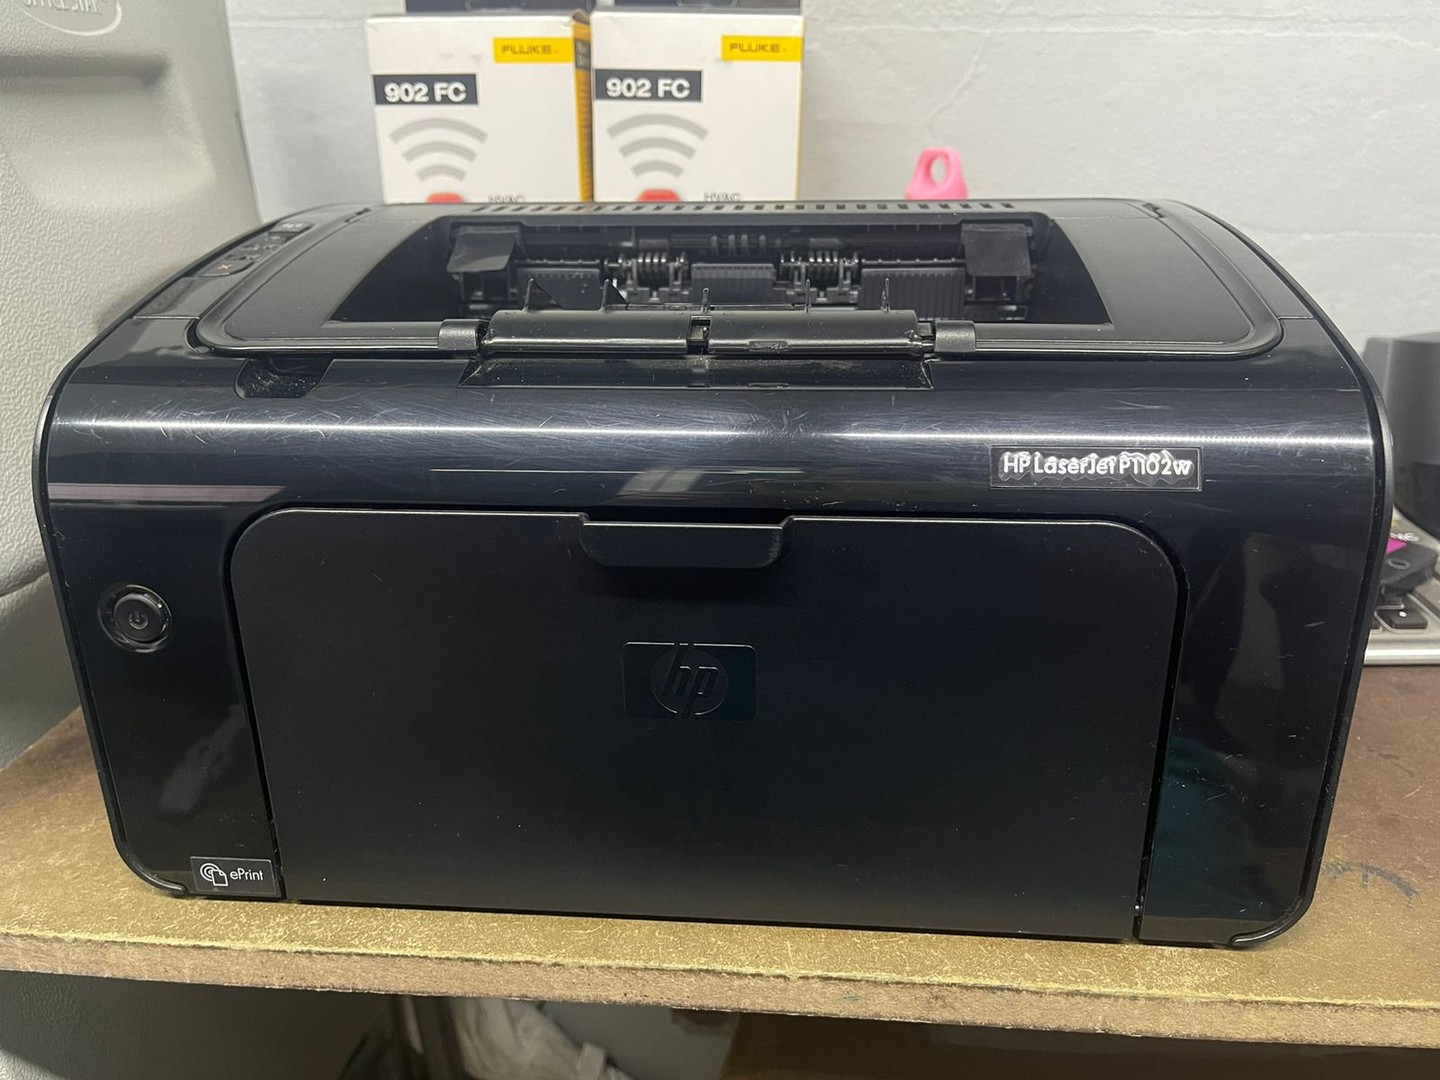 impresoras y scanners - Printer impresora Hp LaserJet P1102w
 0